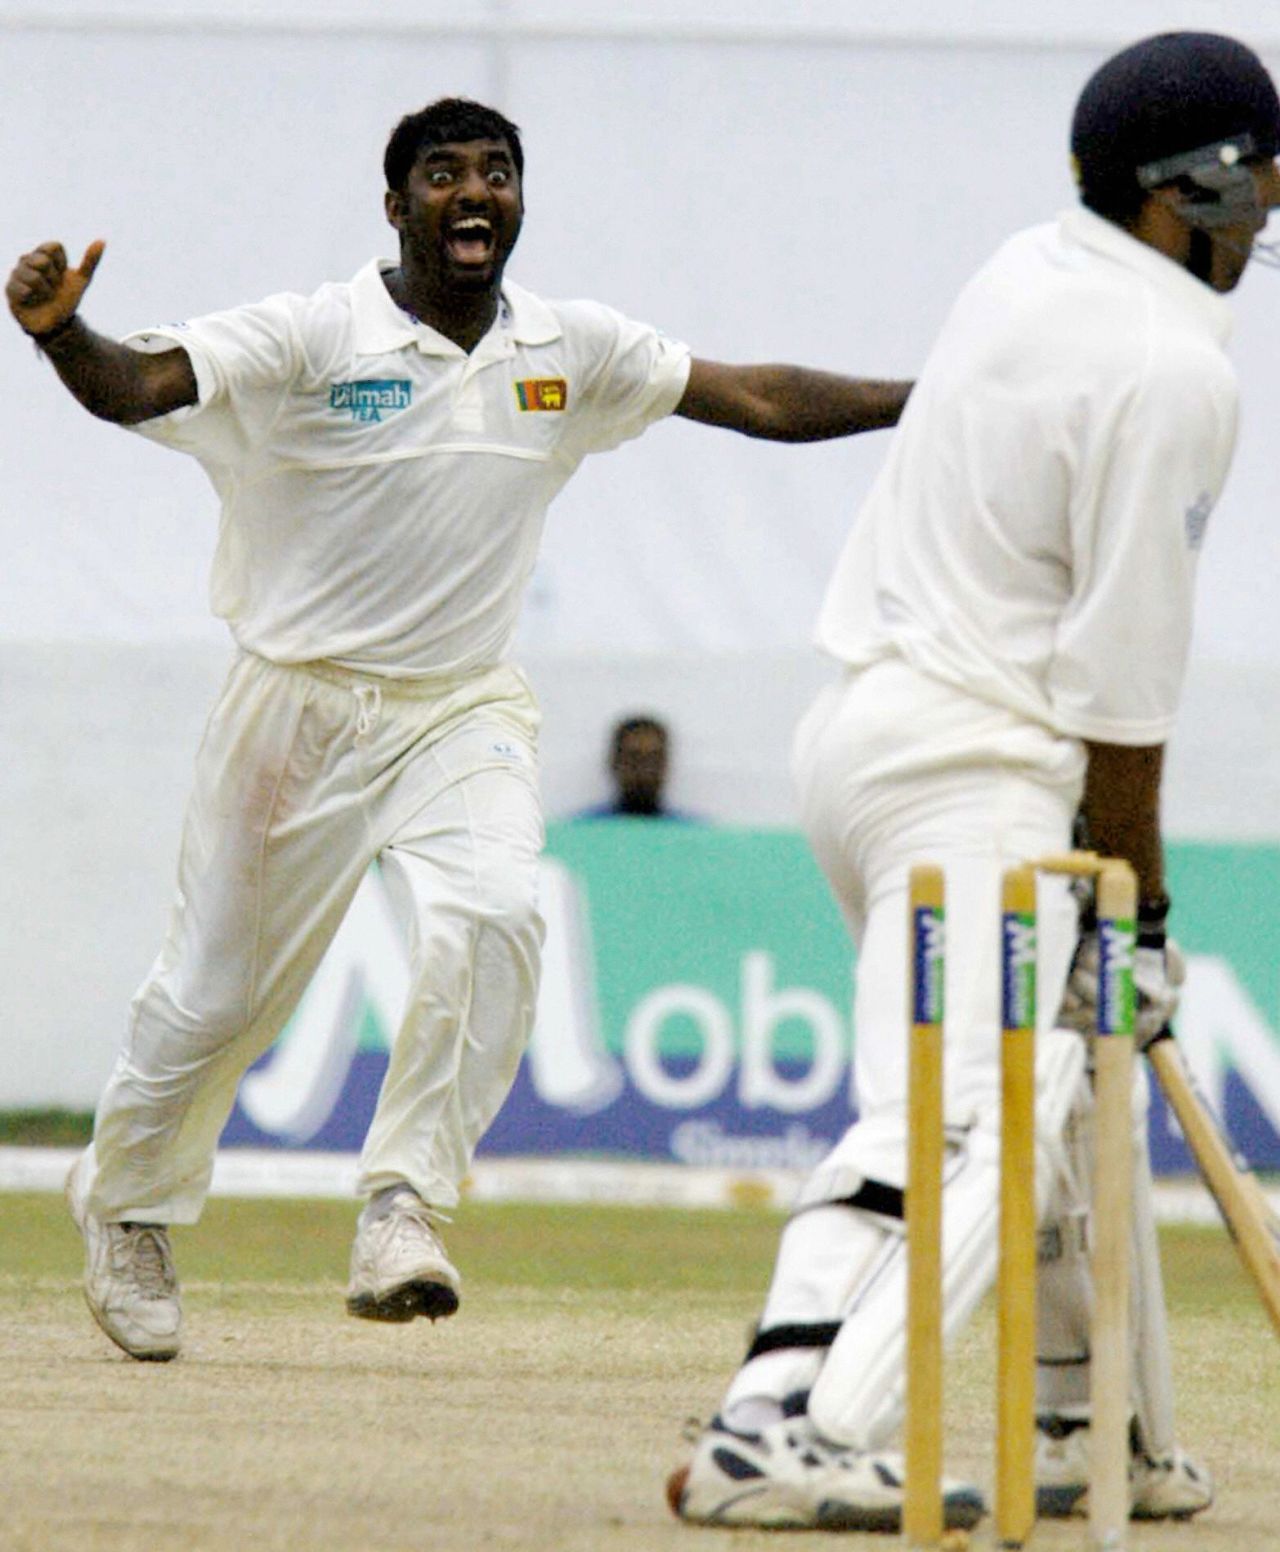 Wily, wide-eyed Murali had a habit of racking up seven-wicket hauls across formats